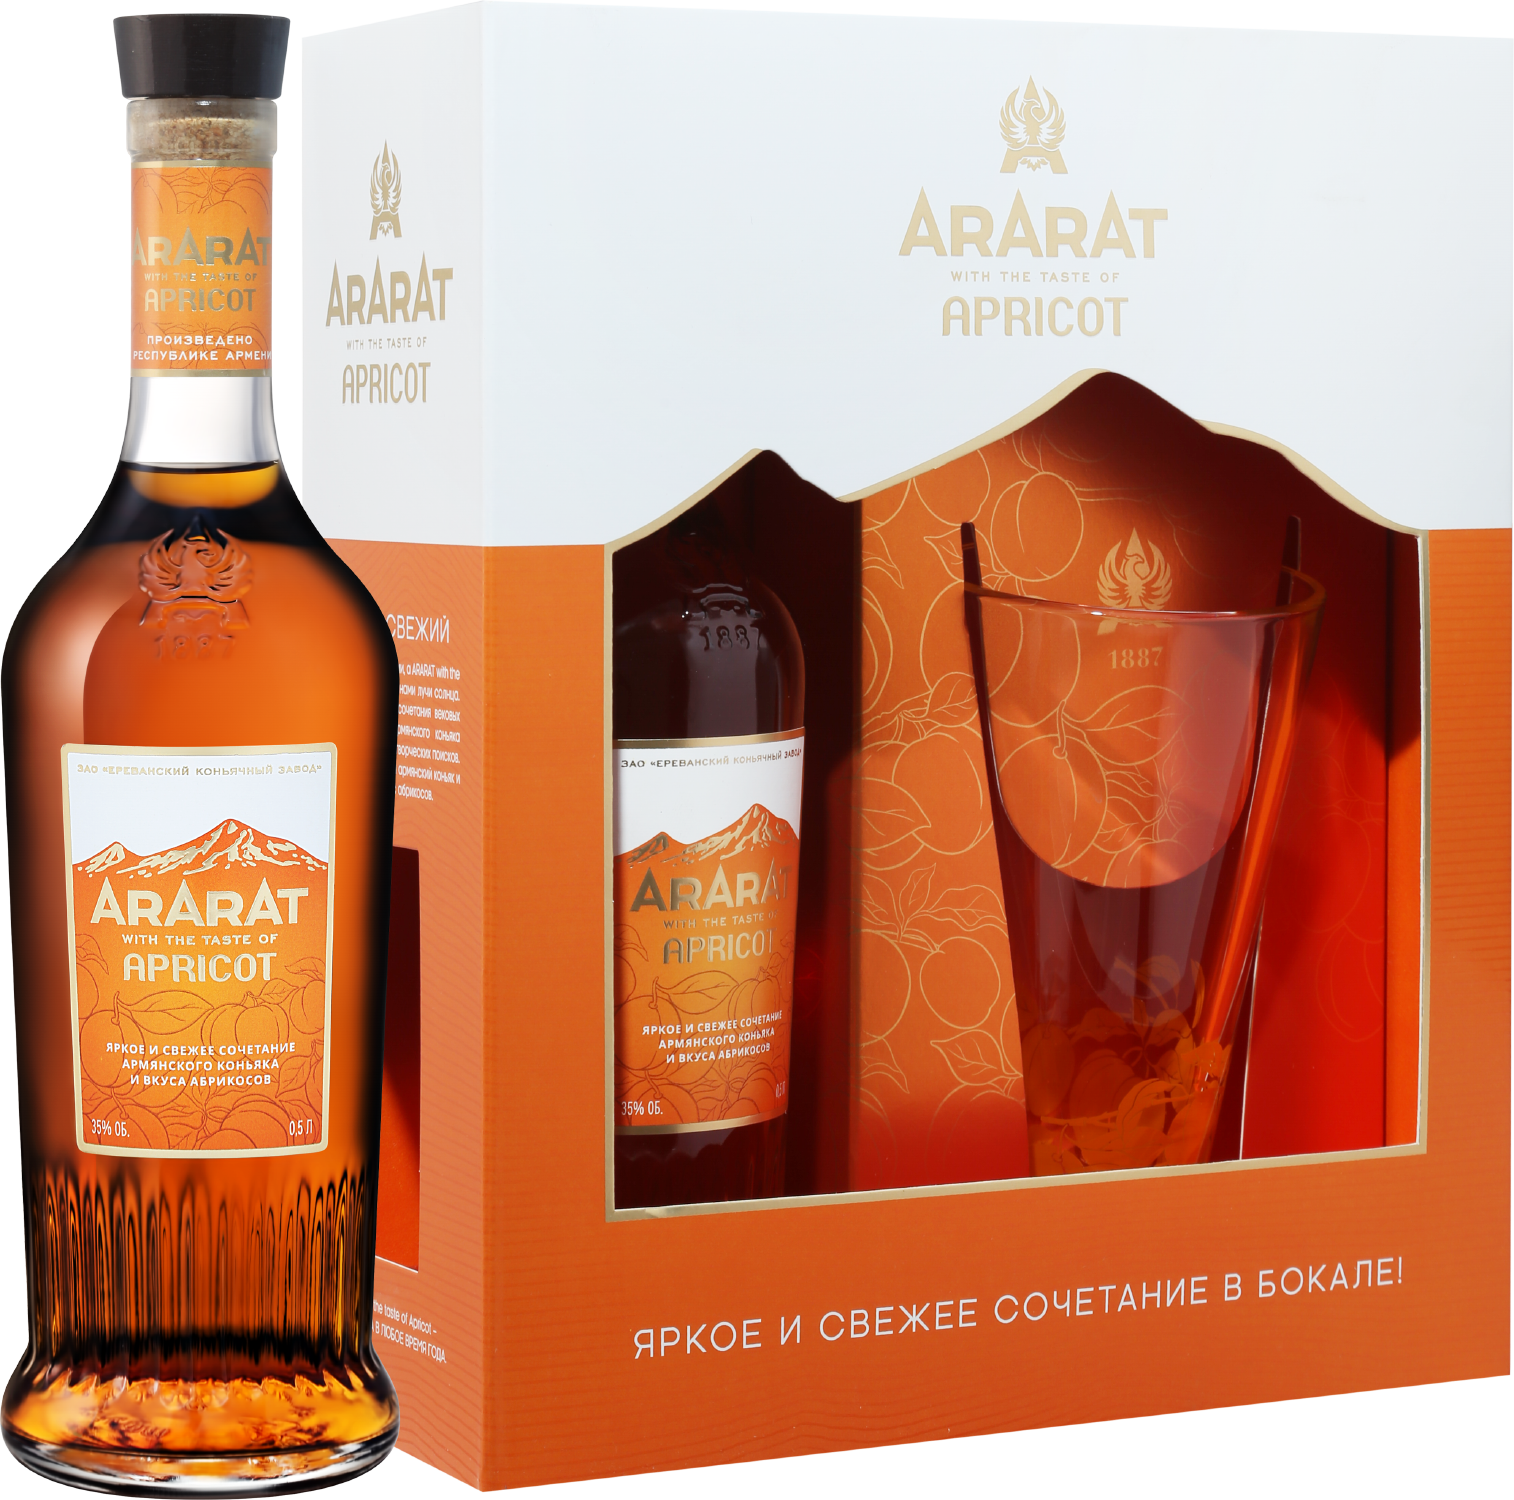 ARARAT Apricot (gift box with a glass)